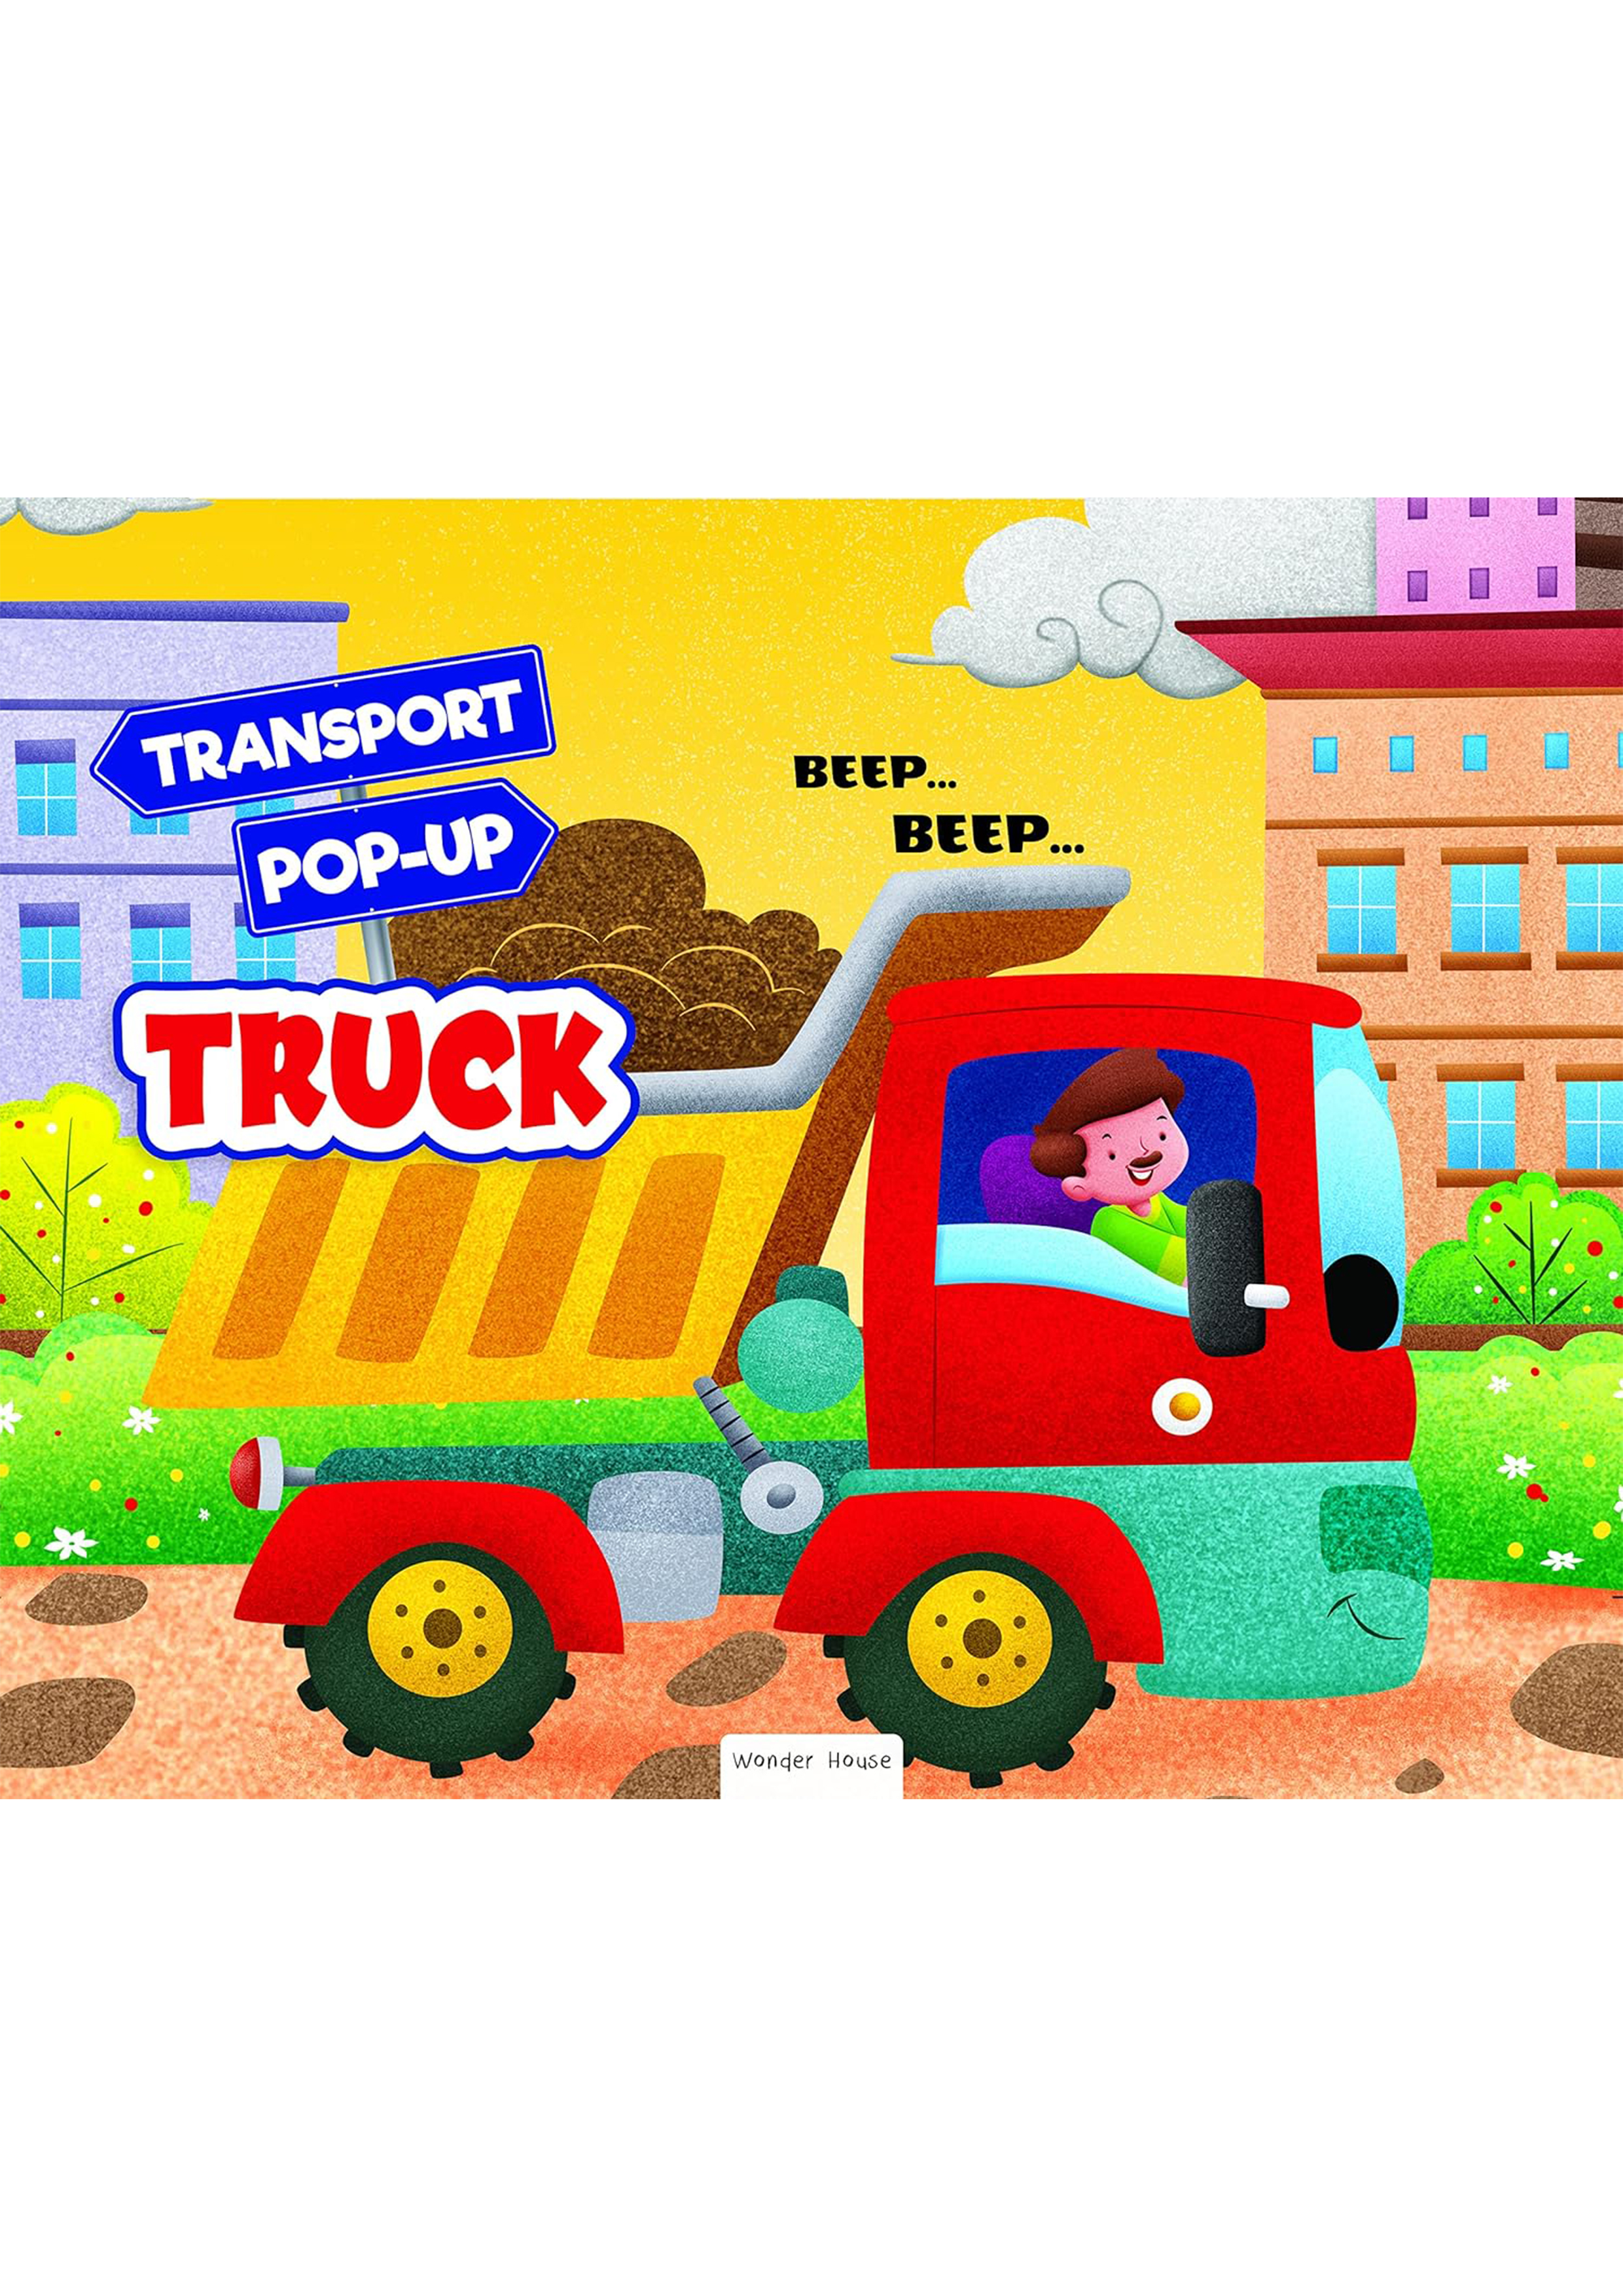 Pop-up Transport - Truck (হার্ডকভার)